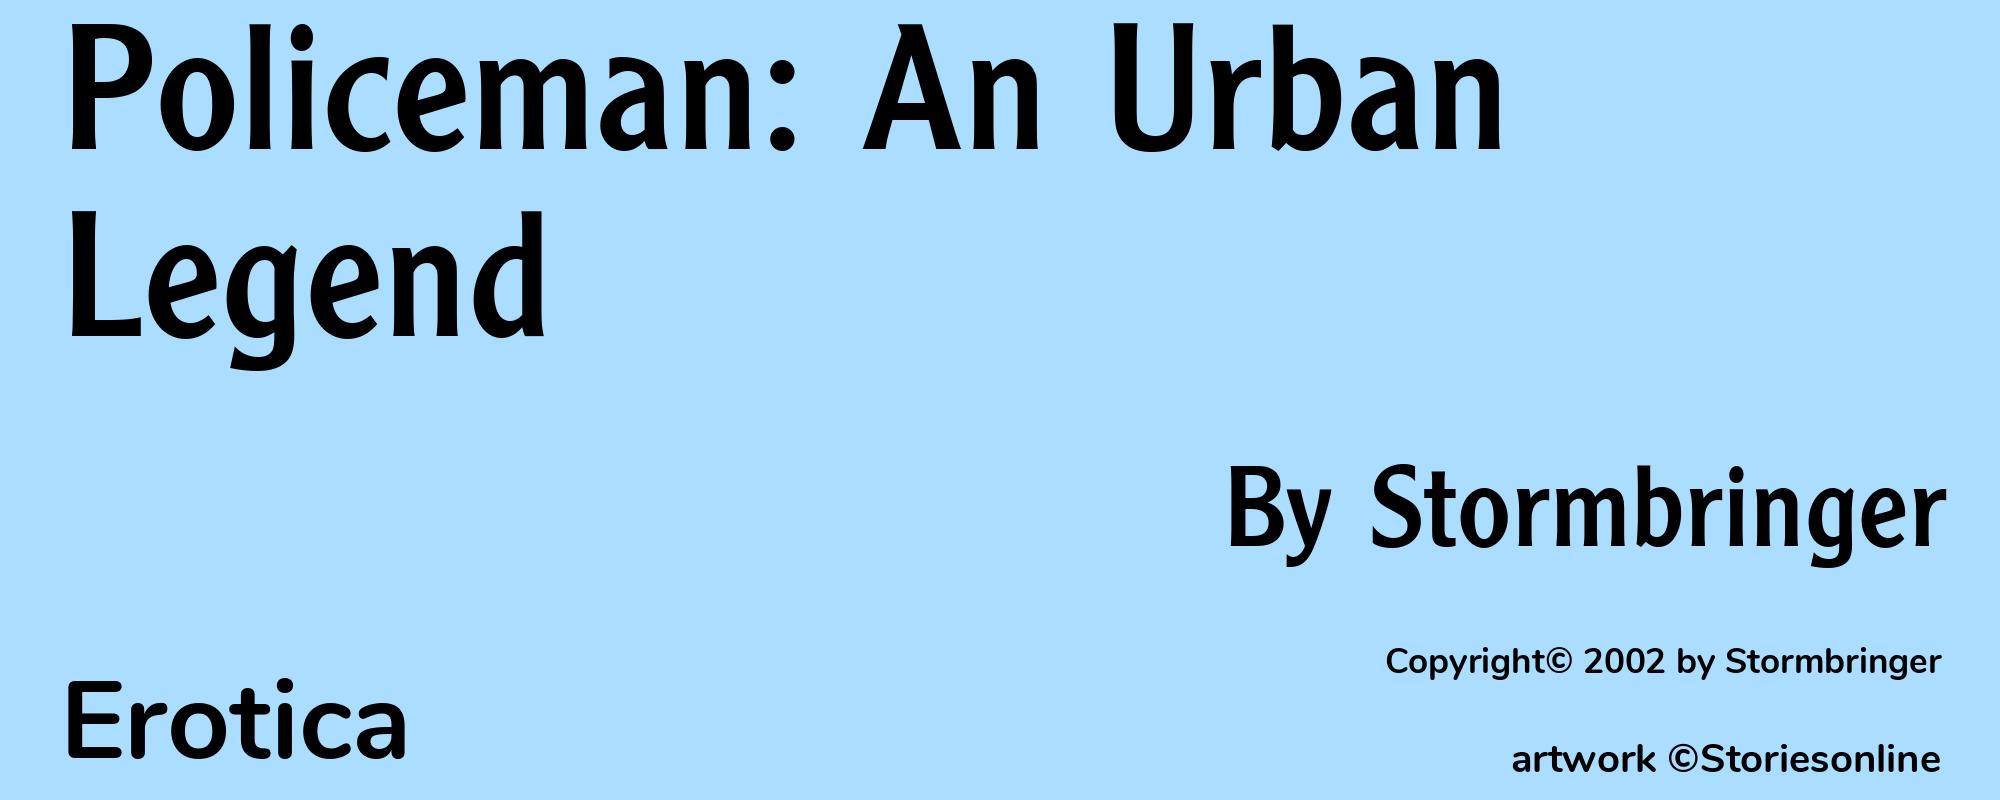 Policeman: An Urban Legend - Cover